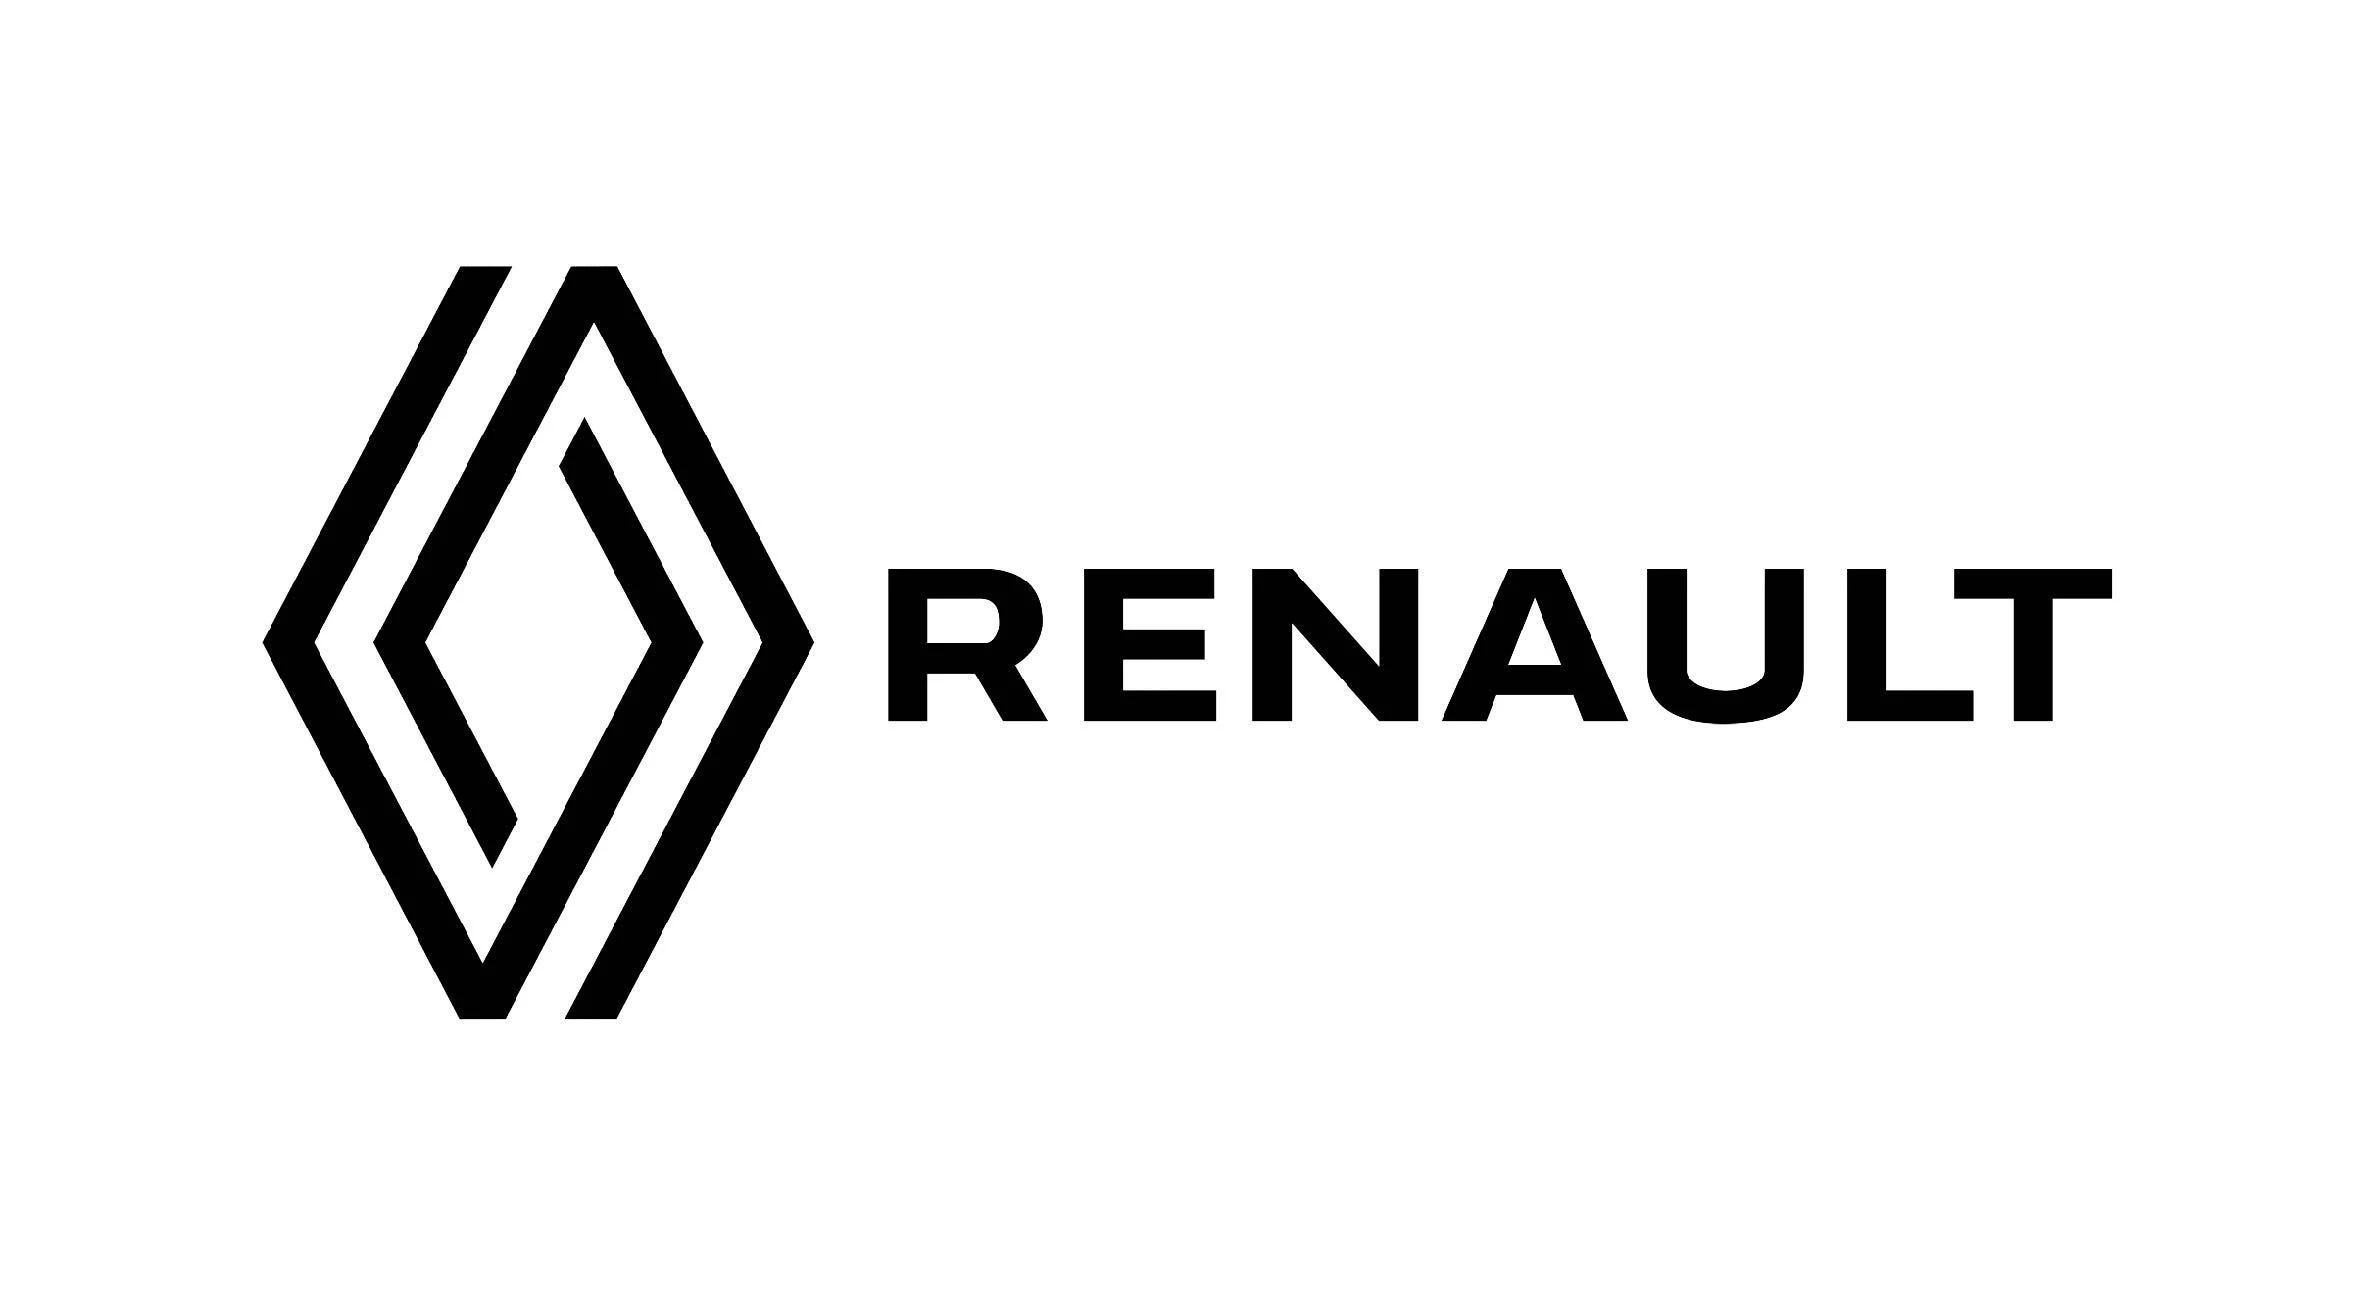 Renault car brand logo